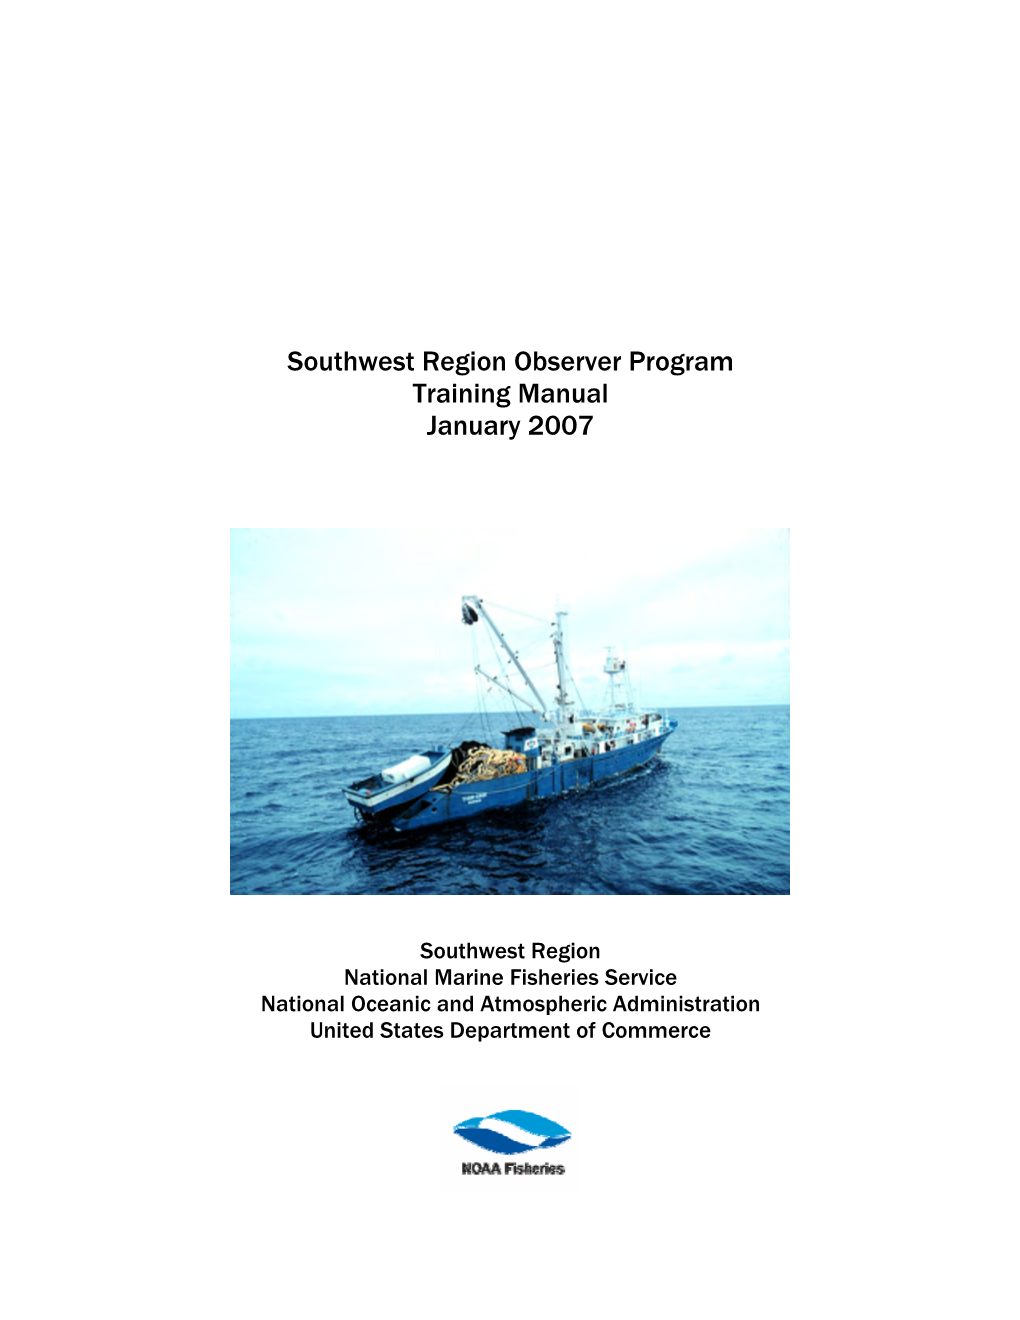 Southwest Region Observer Program Training Manual January 2007